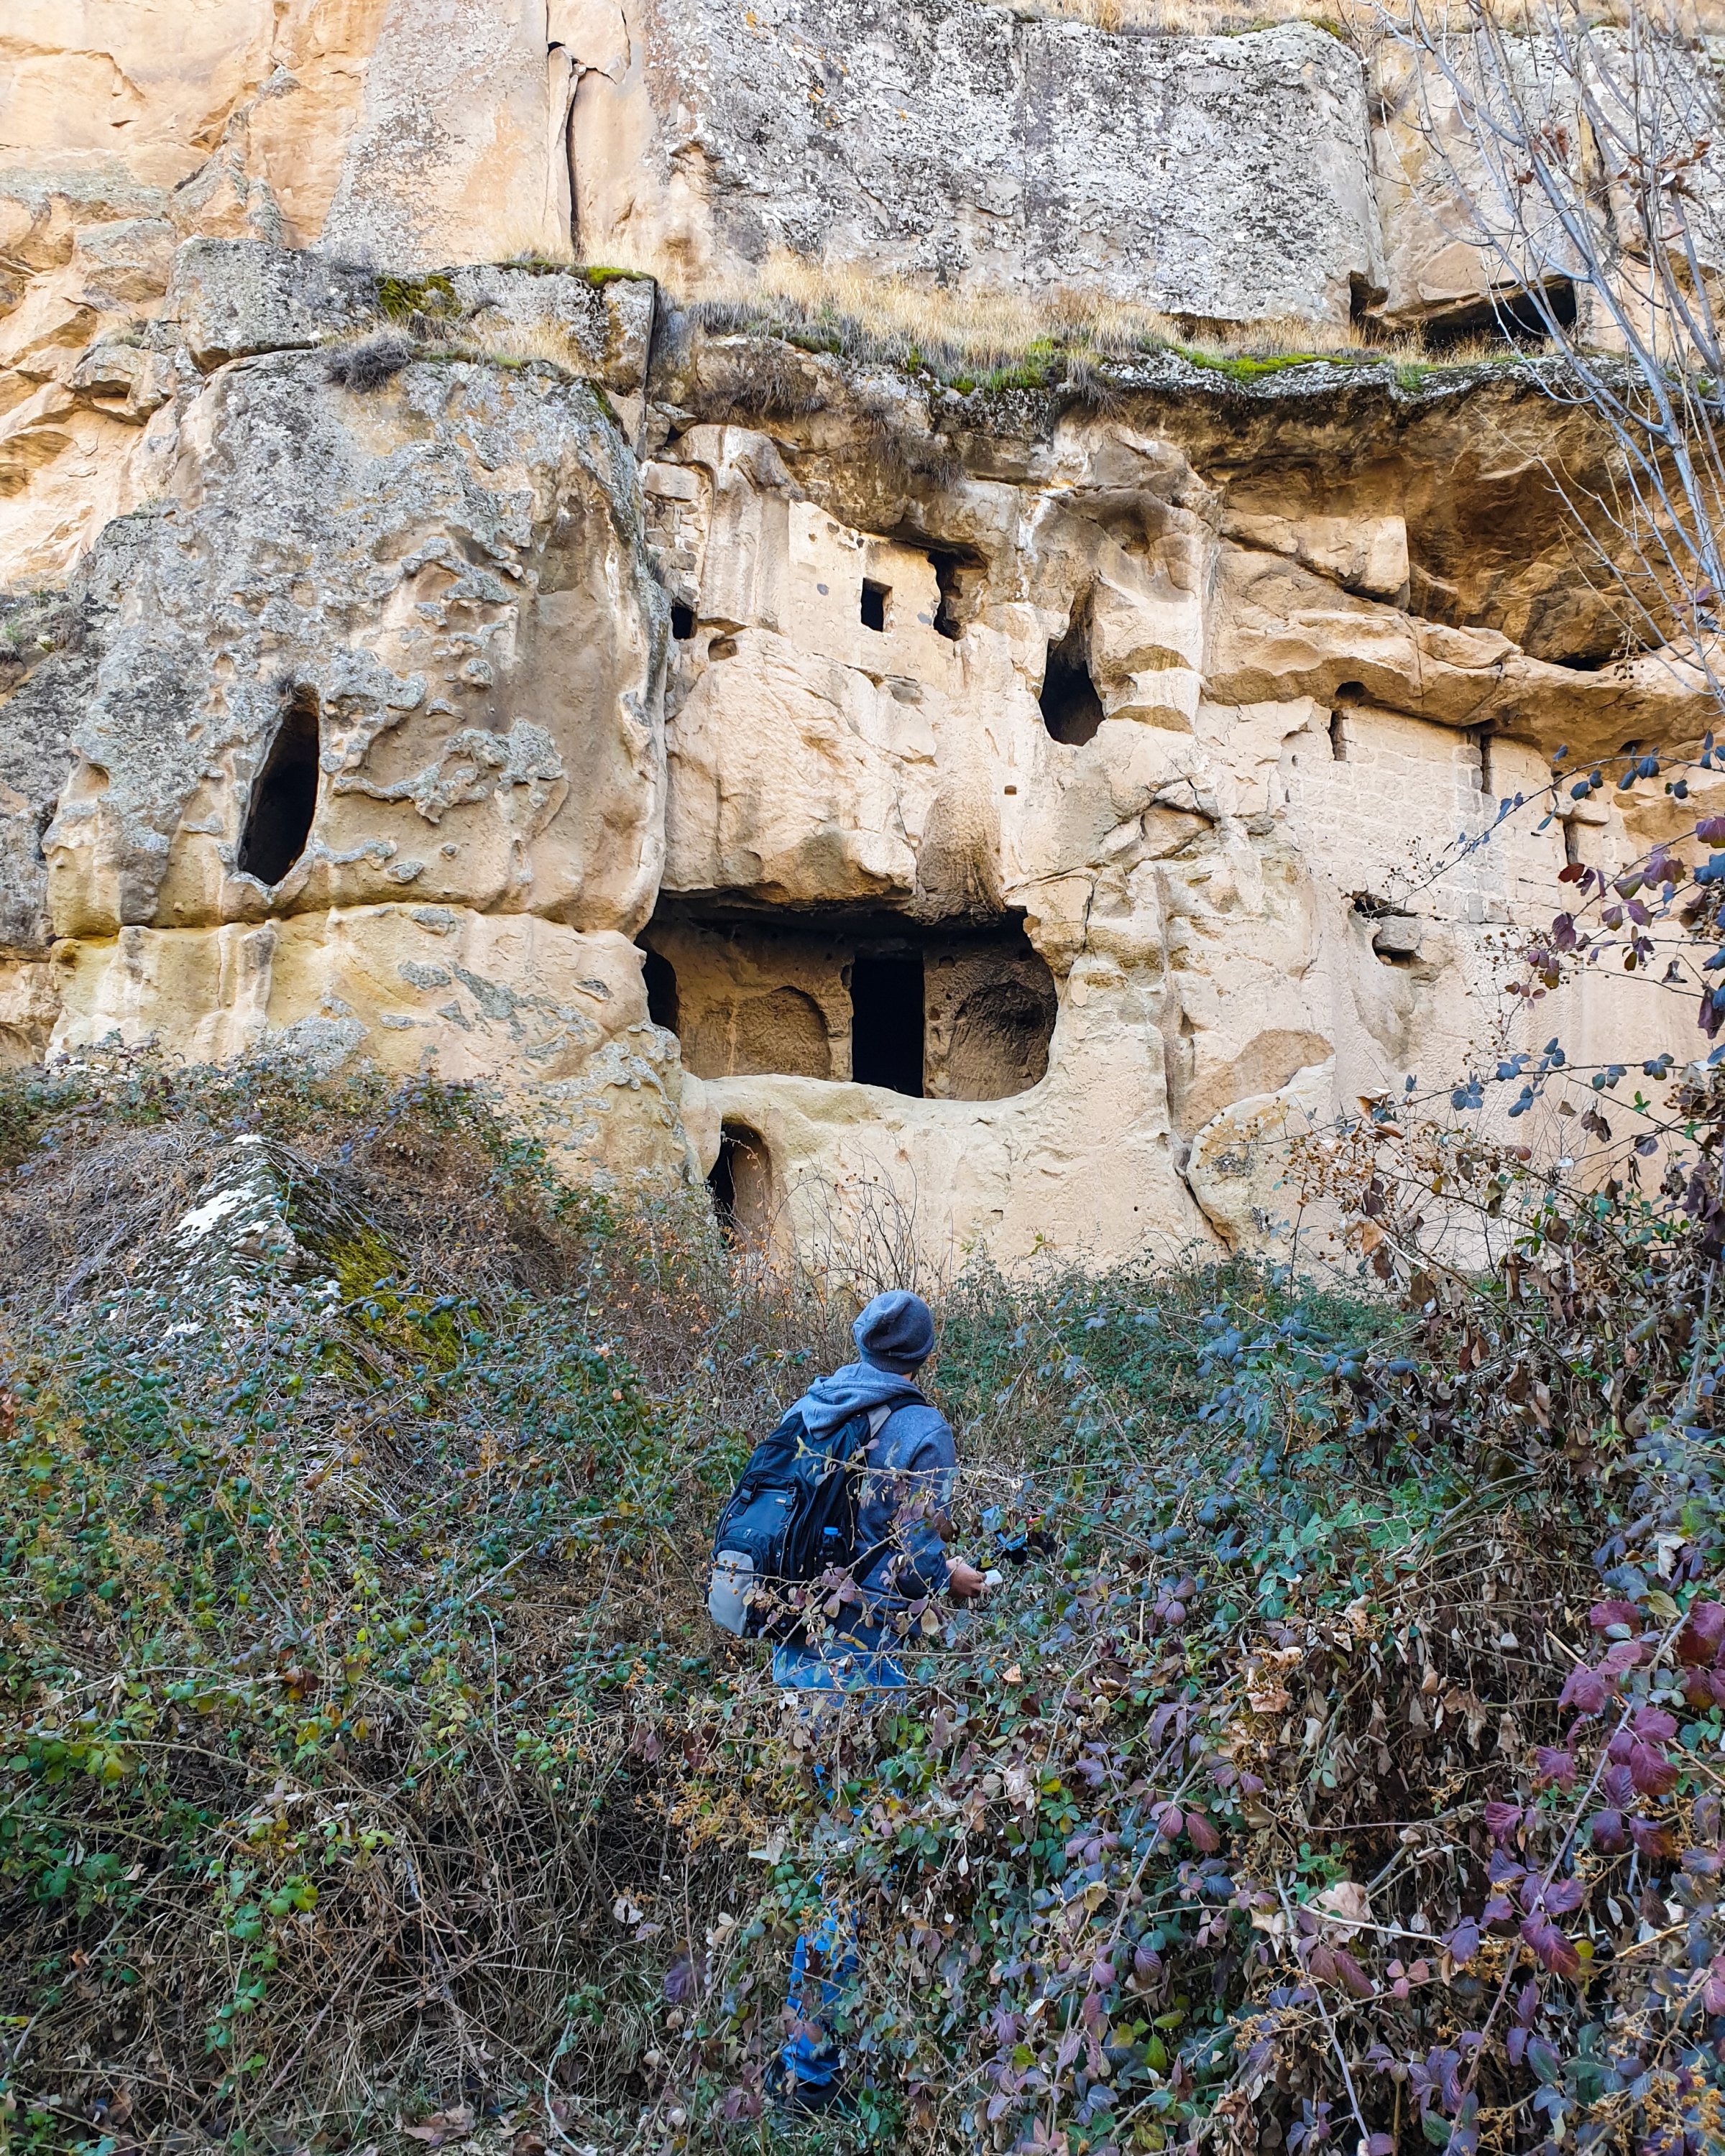 The ancient dwellings in Ihlara Valley. (Photo by Argun Konuk)